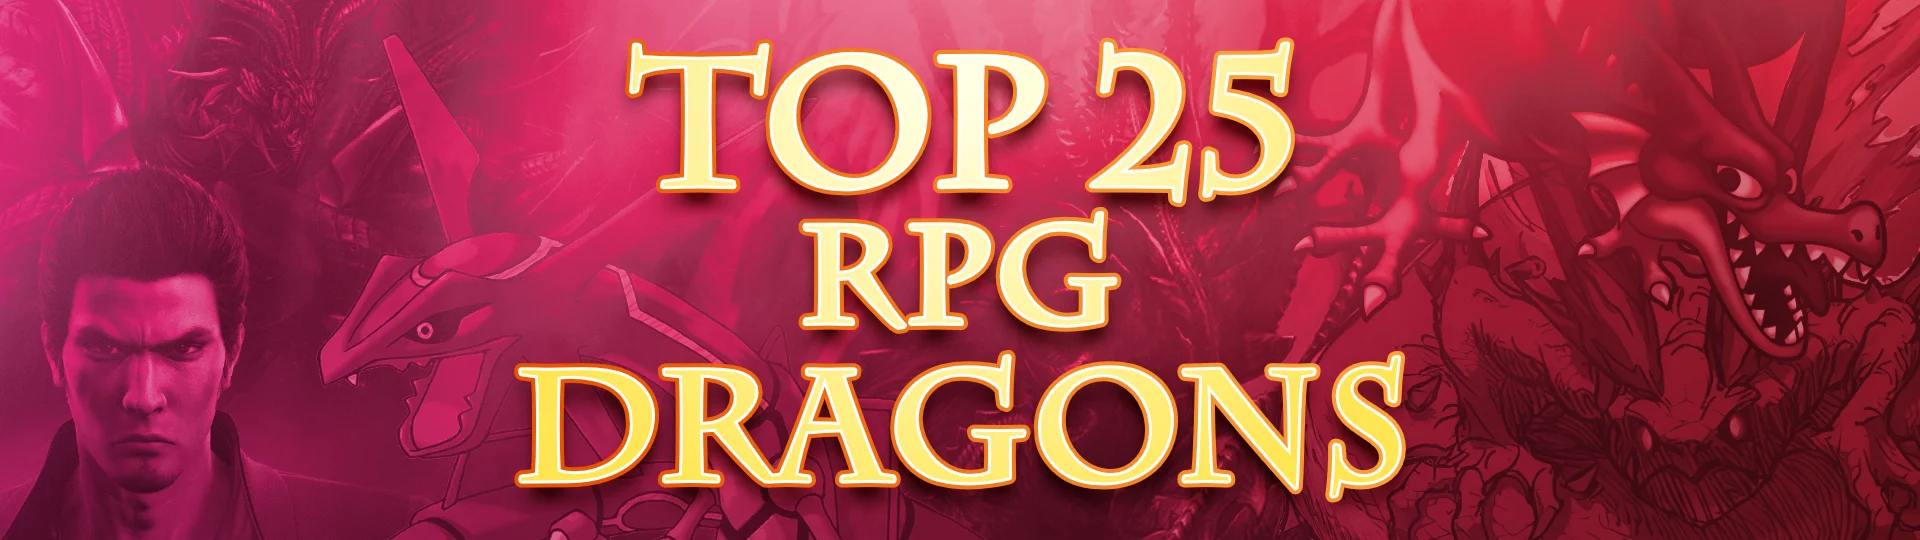 Top 25 RPG Dragons